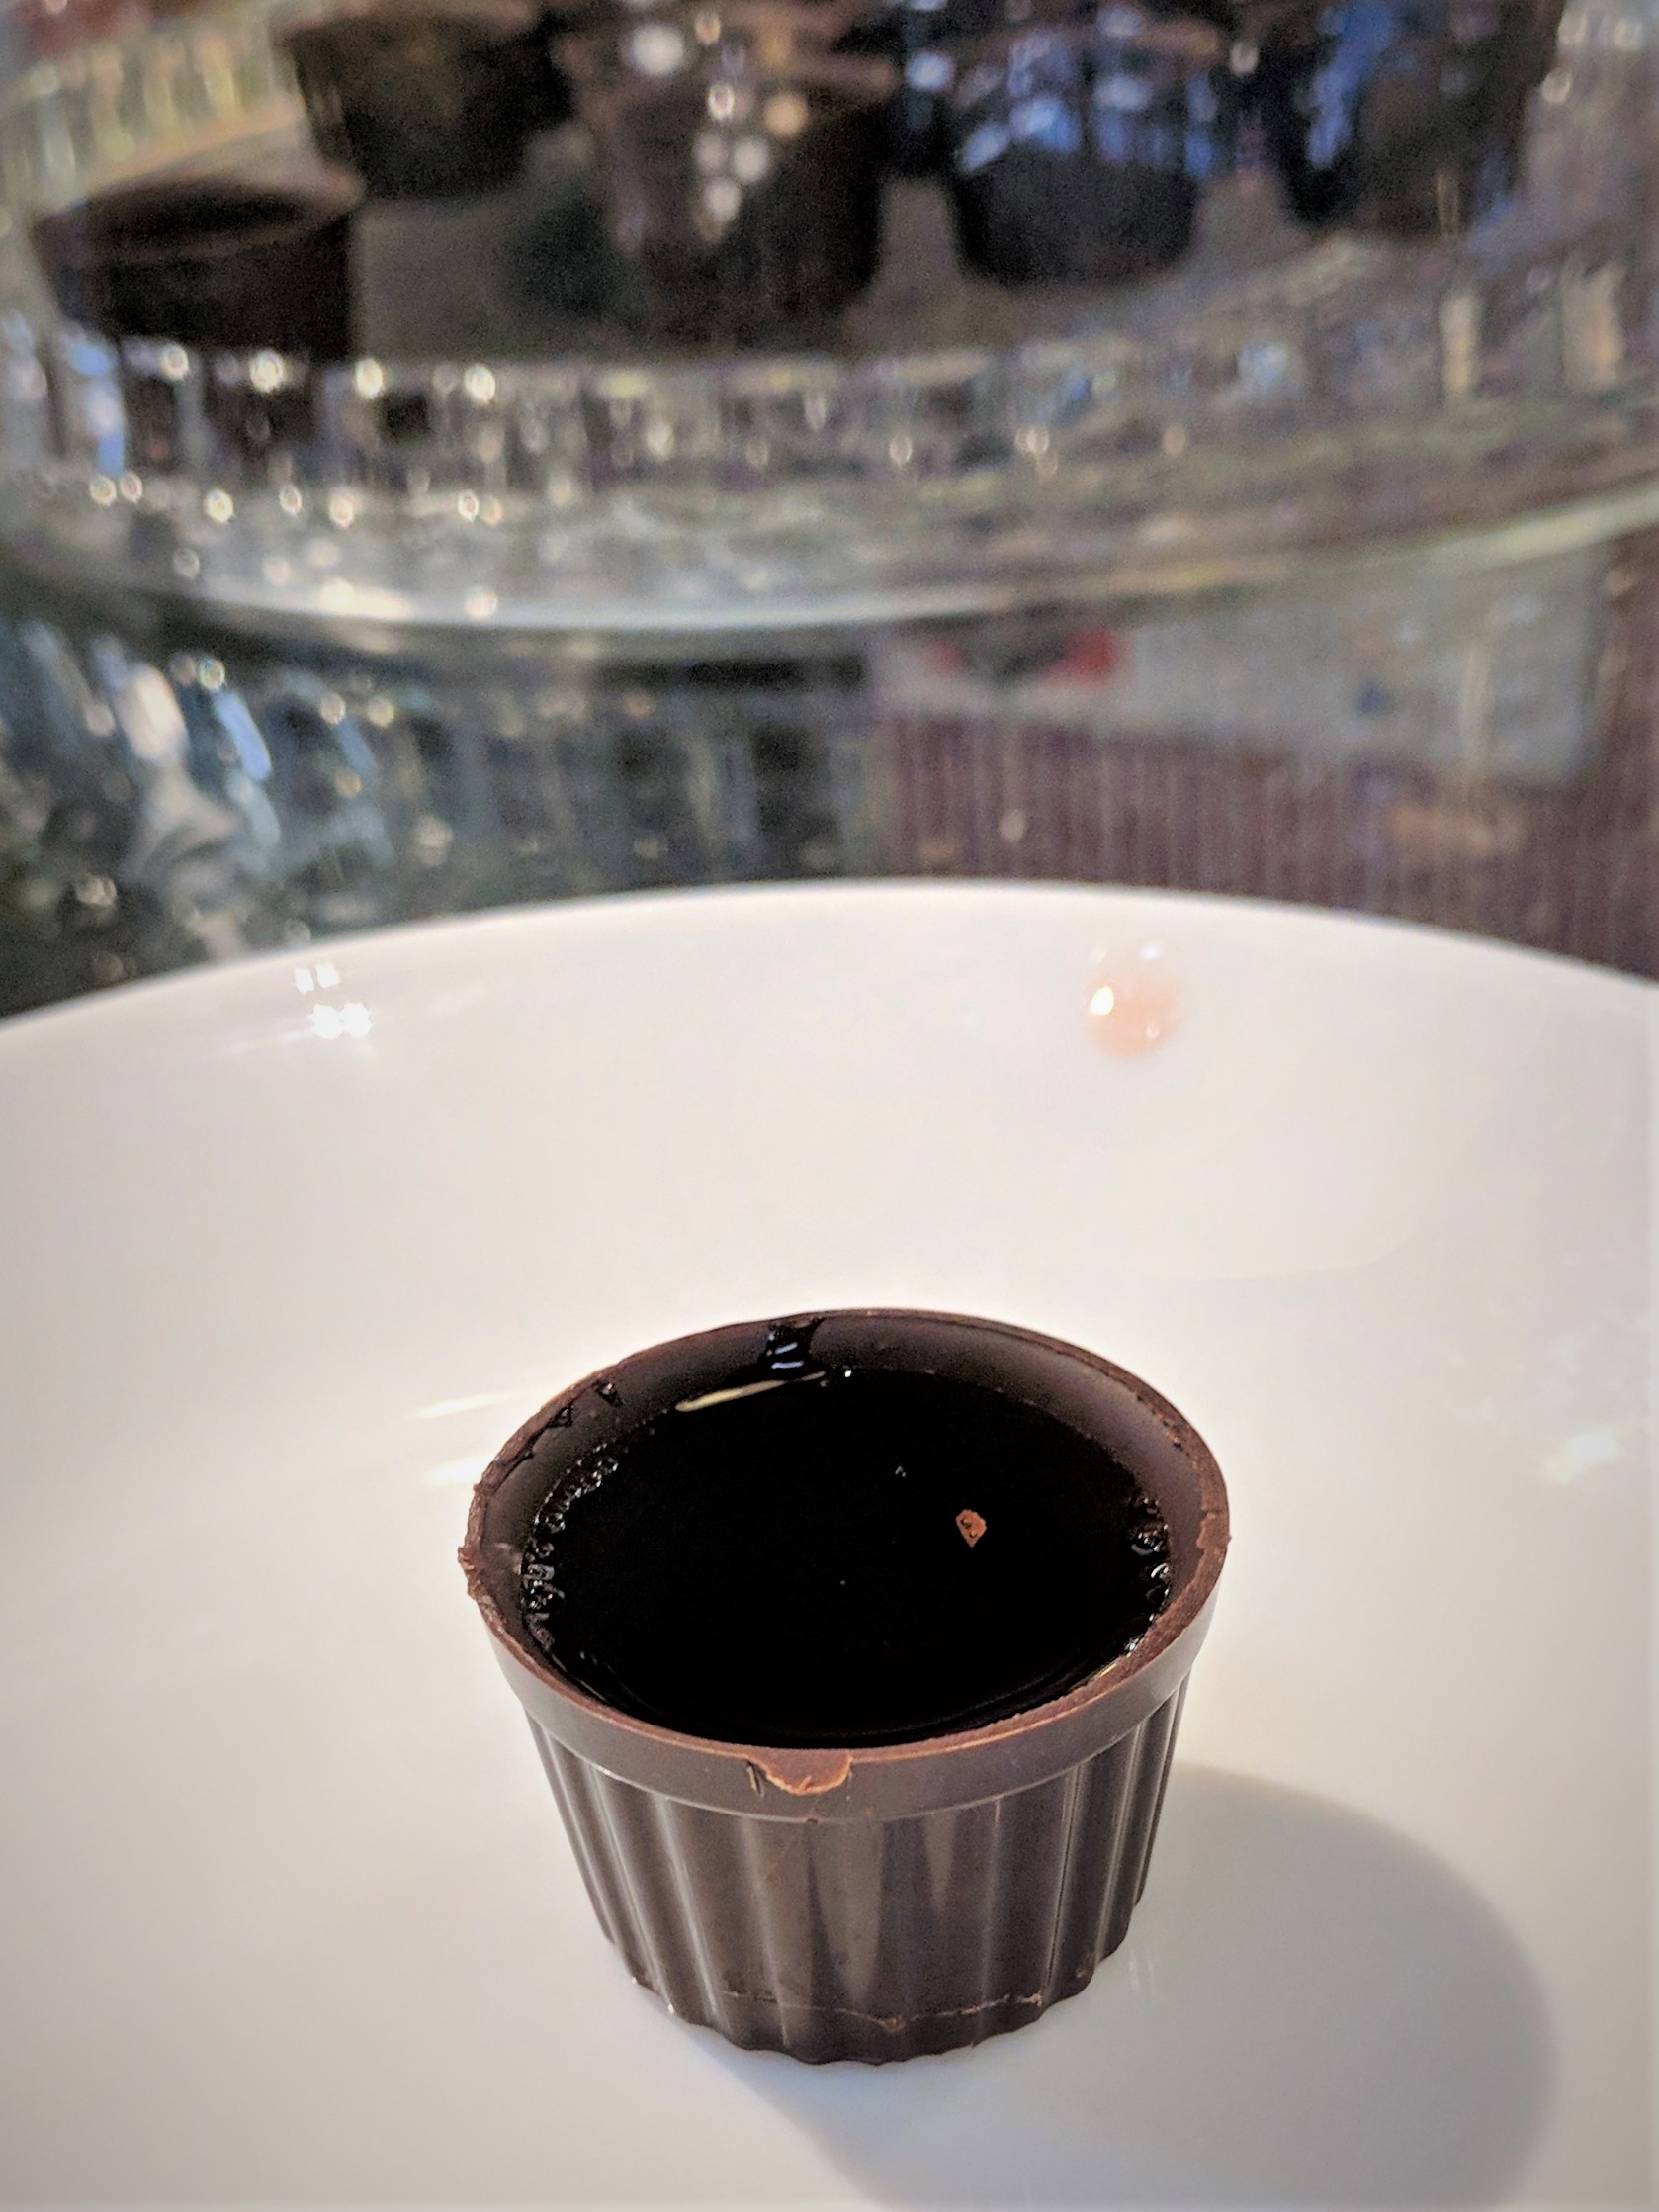 Ginja, a sour cherry liquor, in an edible chocolate cup